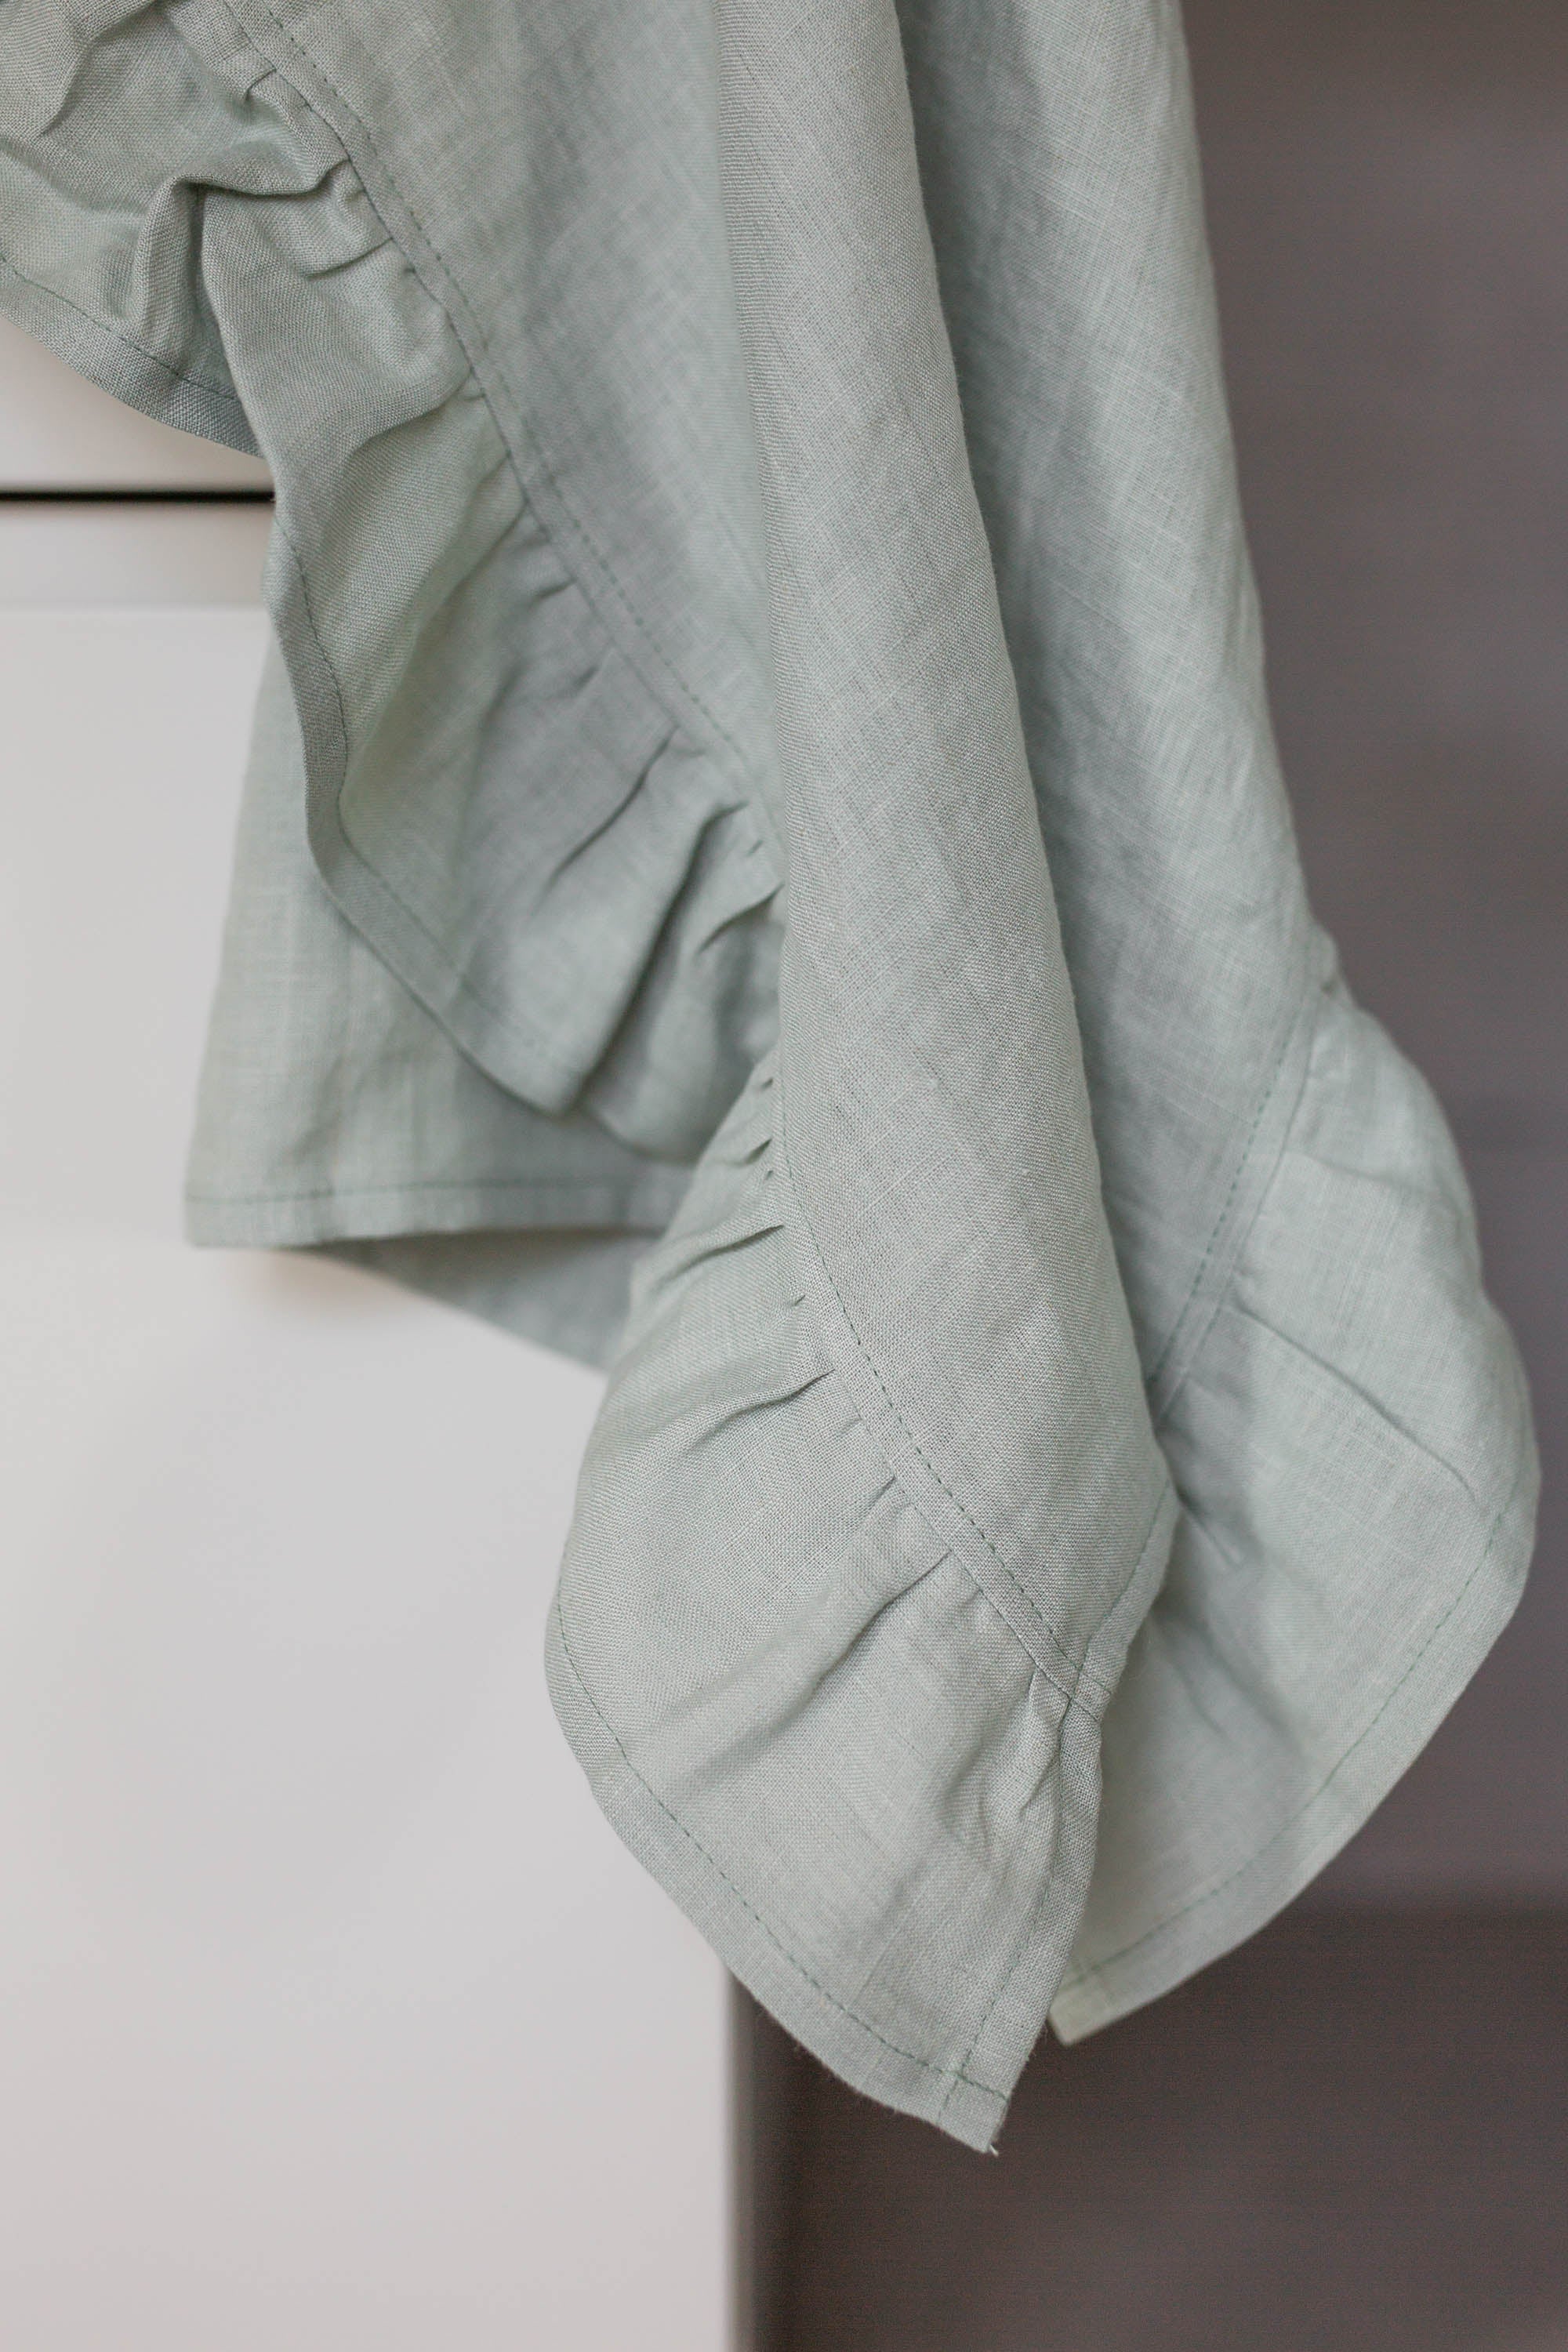 Sage Green Ruffled Linen Tea Towel By AmourLInen